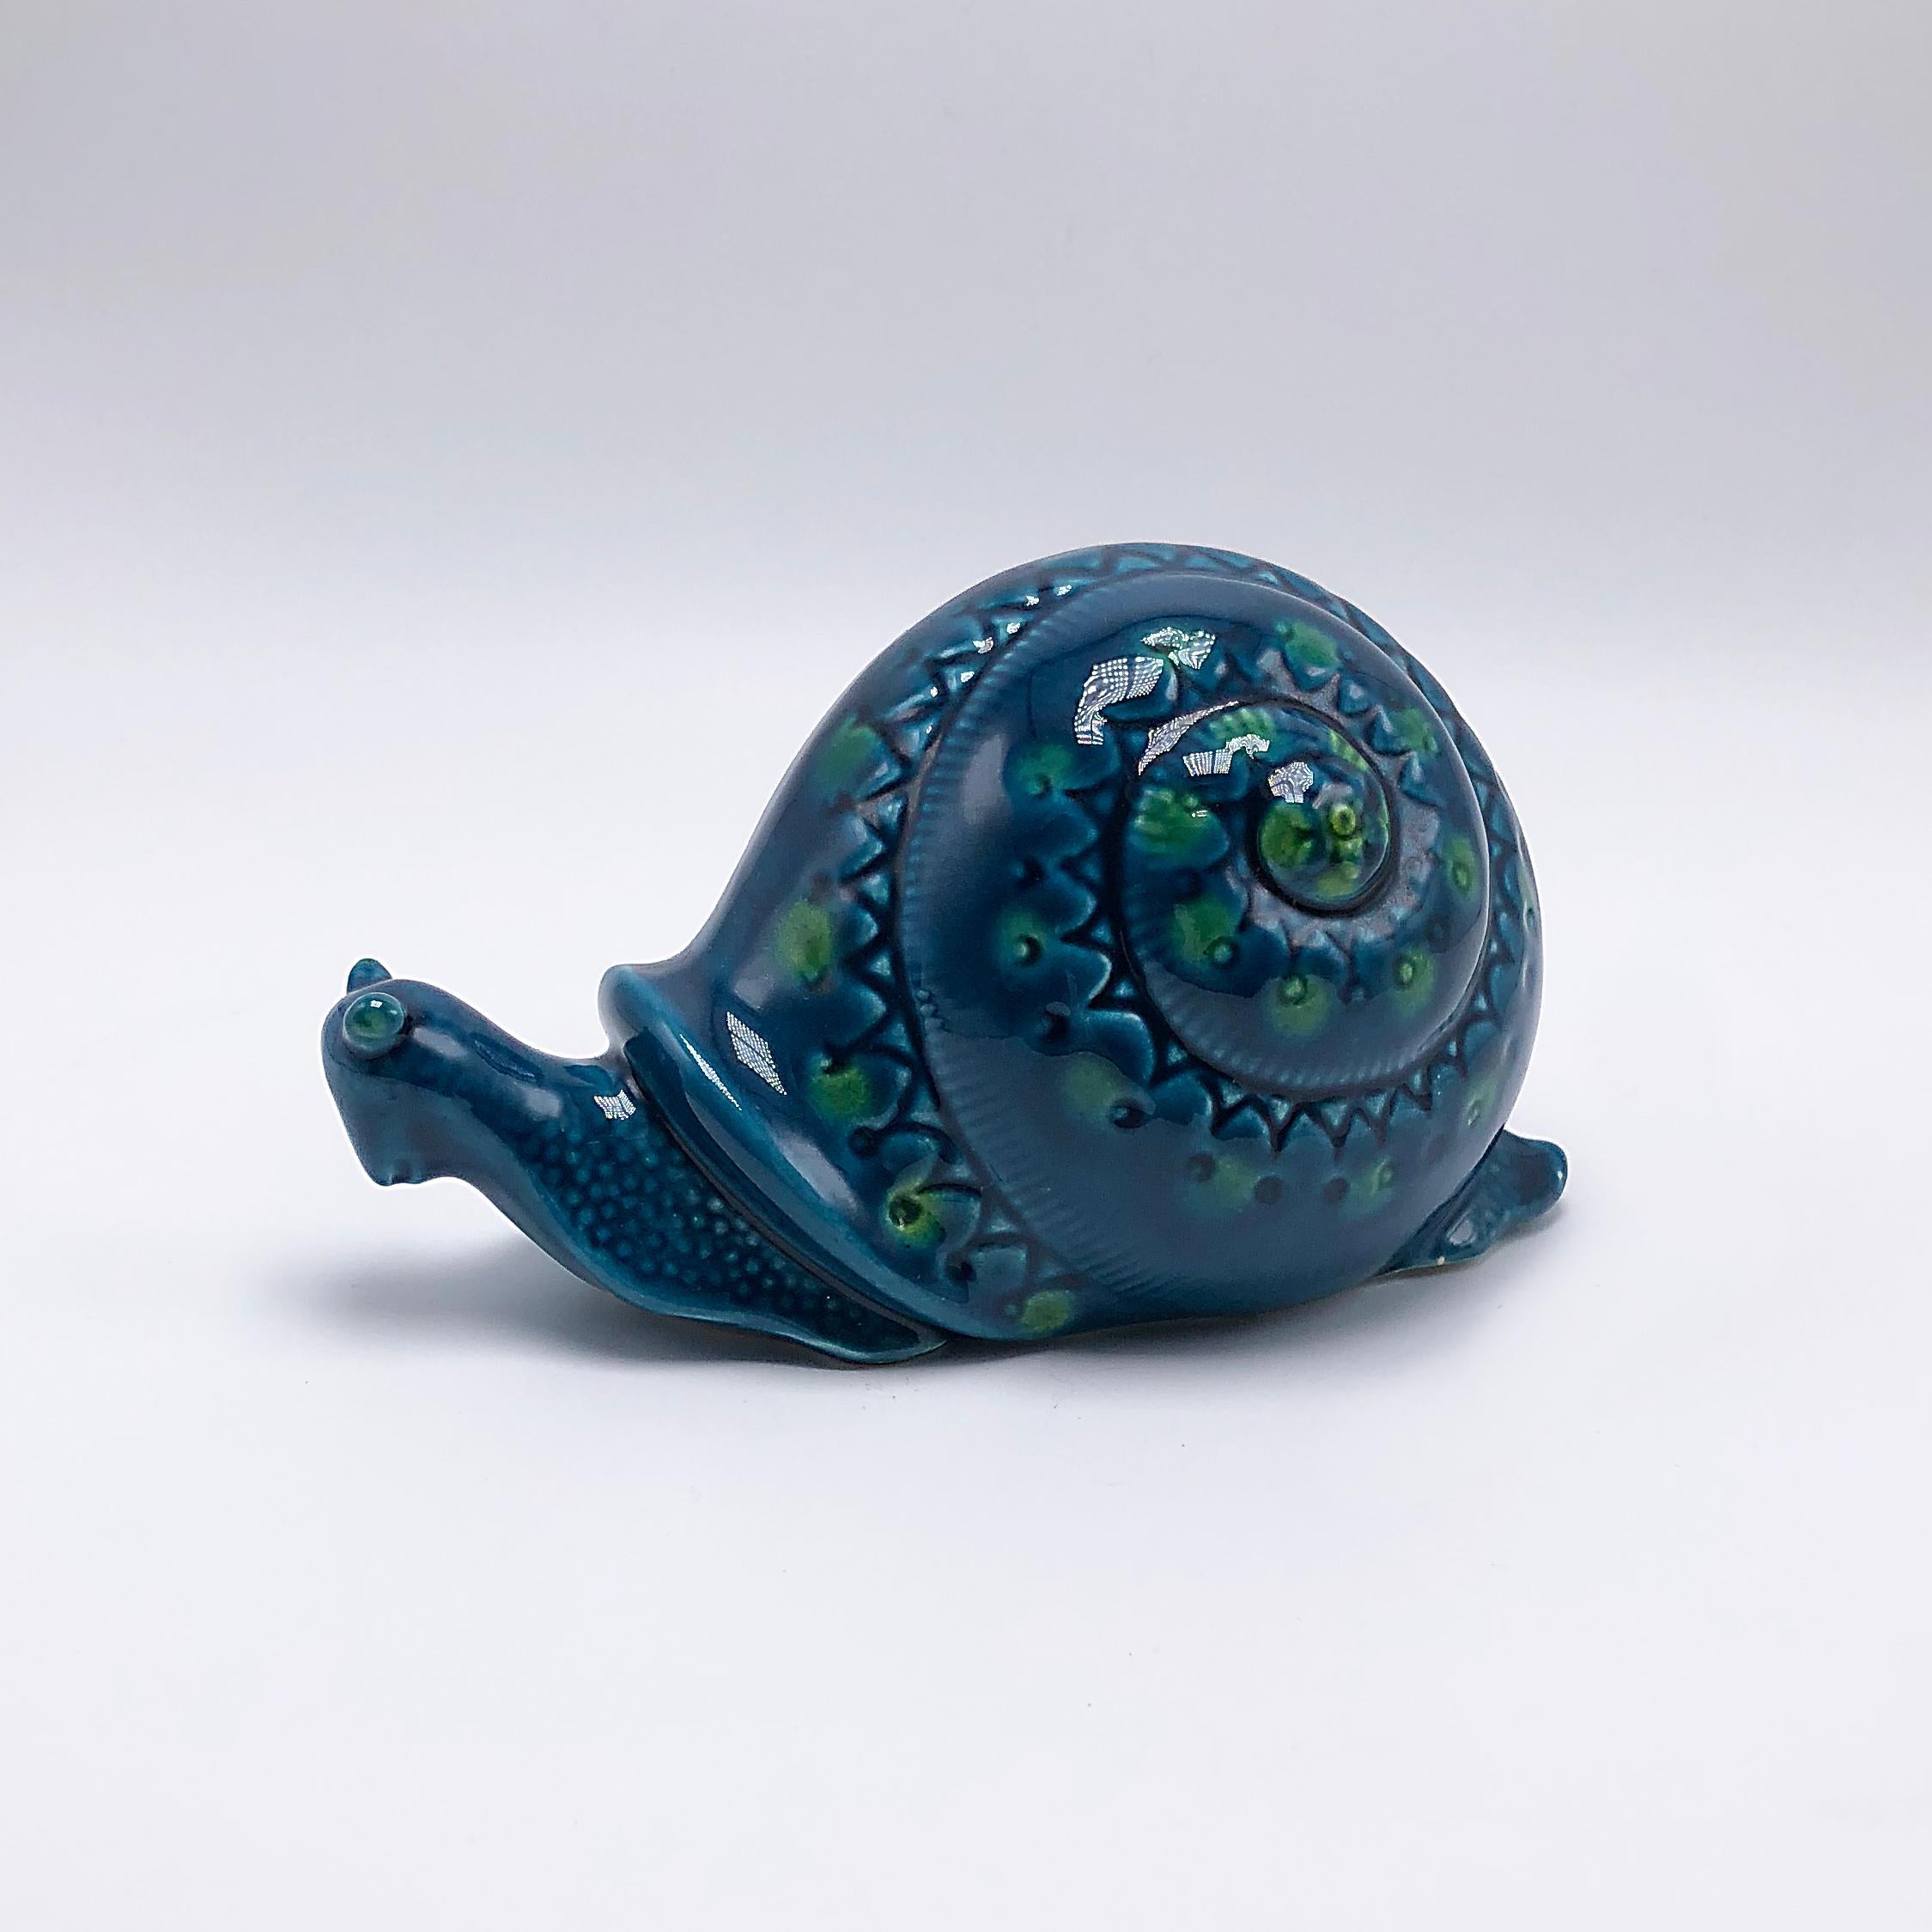 snail ceramics